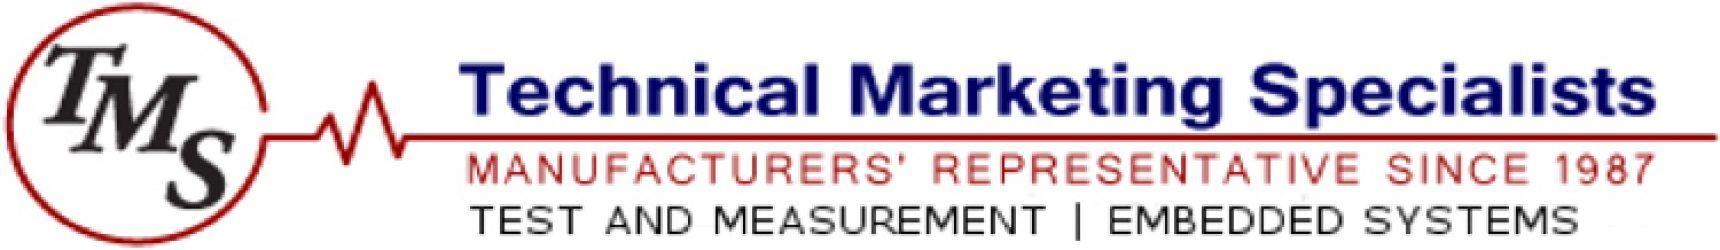 Electronics Manufacturers Logo - Technical Marketing Specialists | Manufacturers' Representative